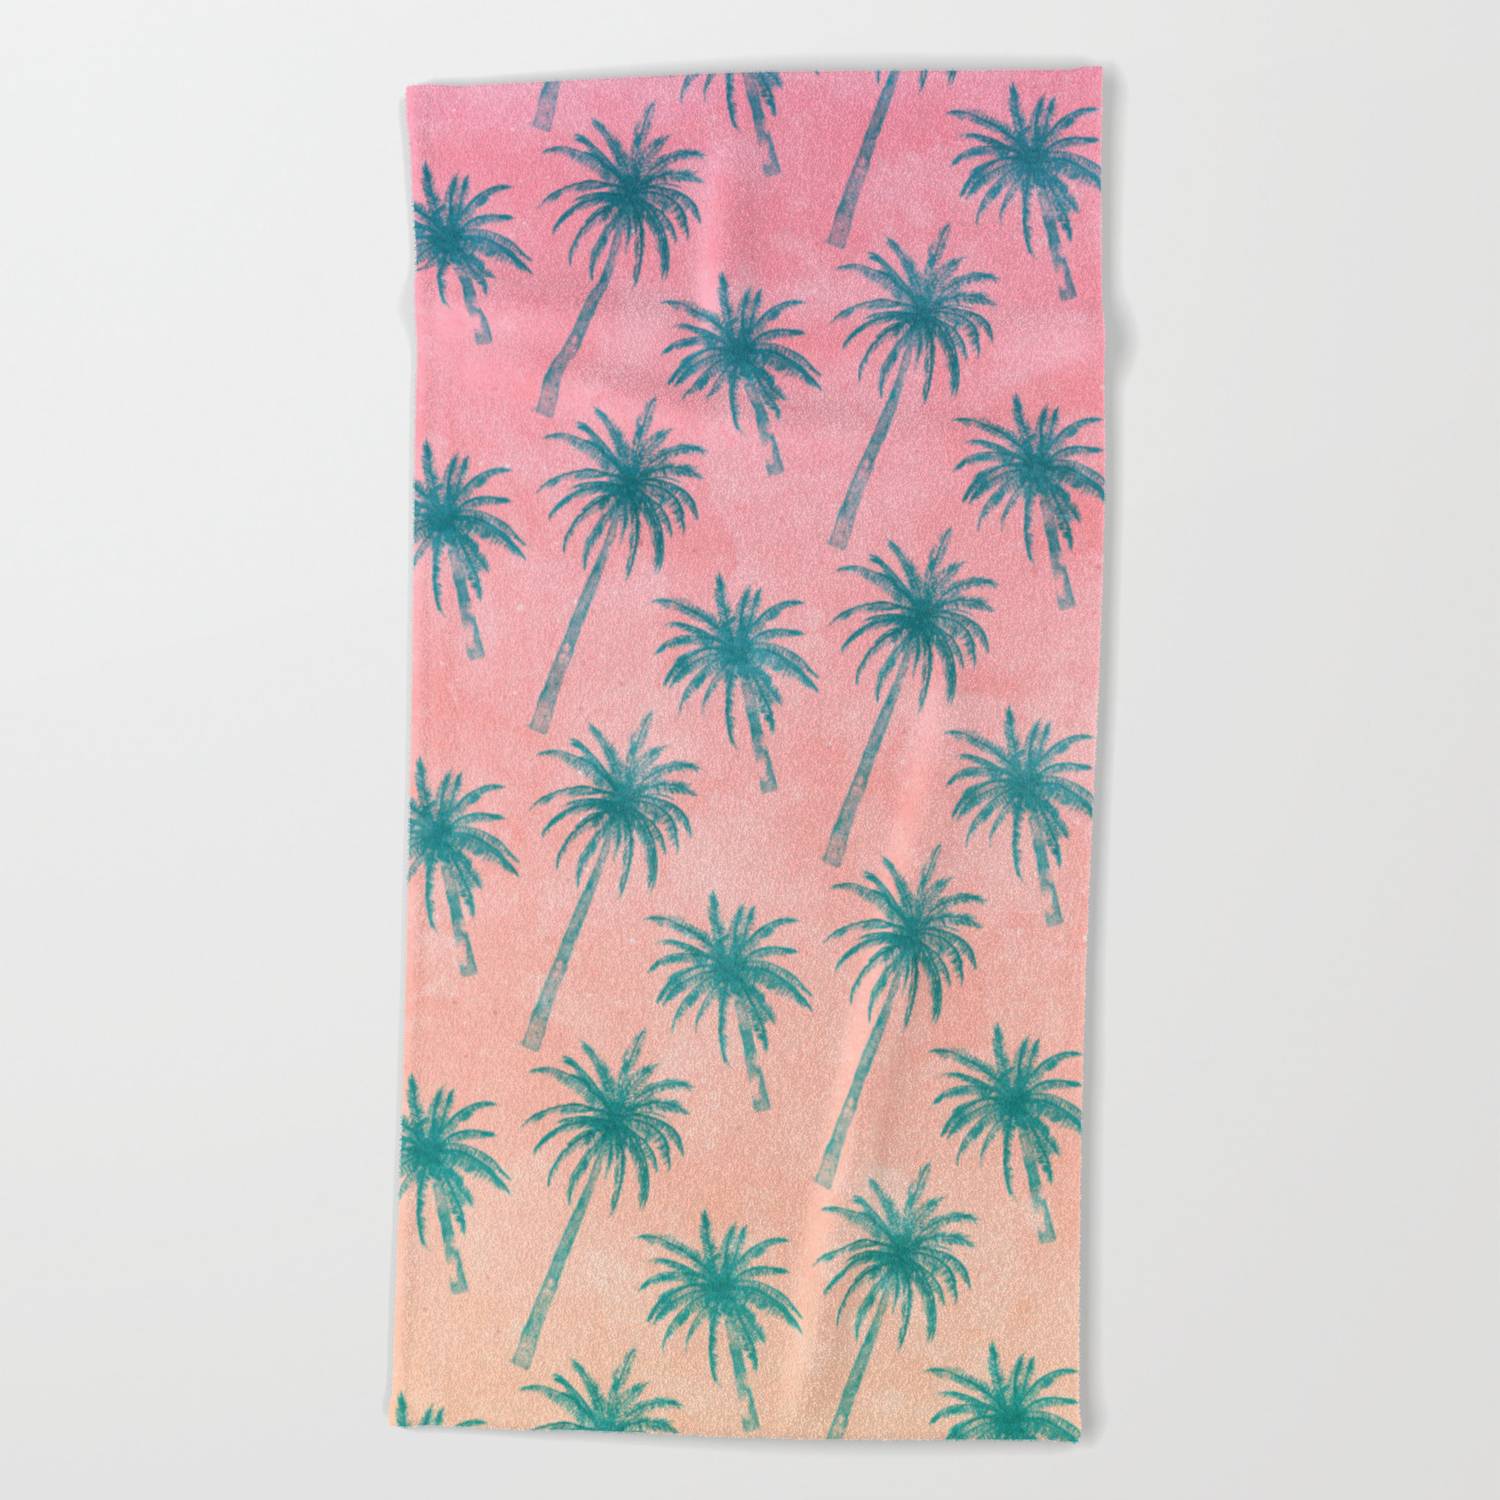 Palmetto Tree With Three Labrador Puppy Beach Towel Very Cute 30”x 60” Towel